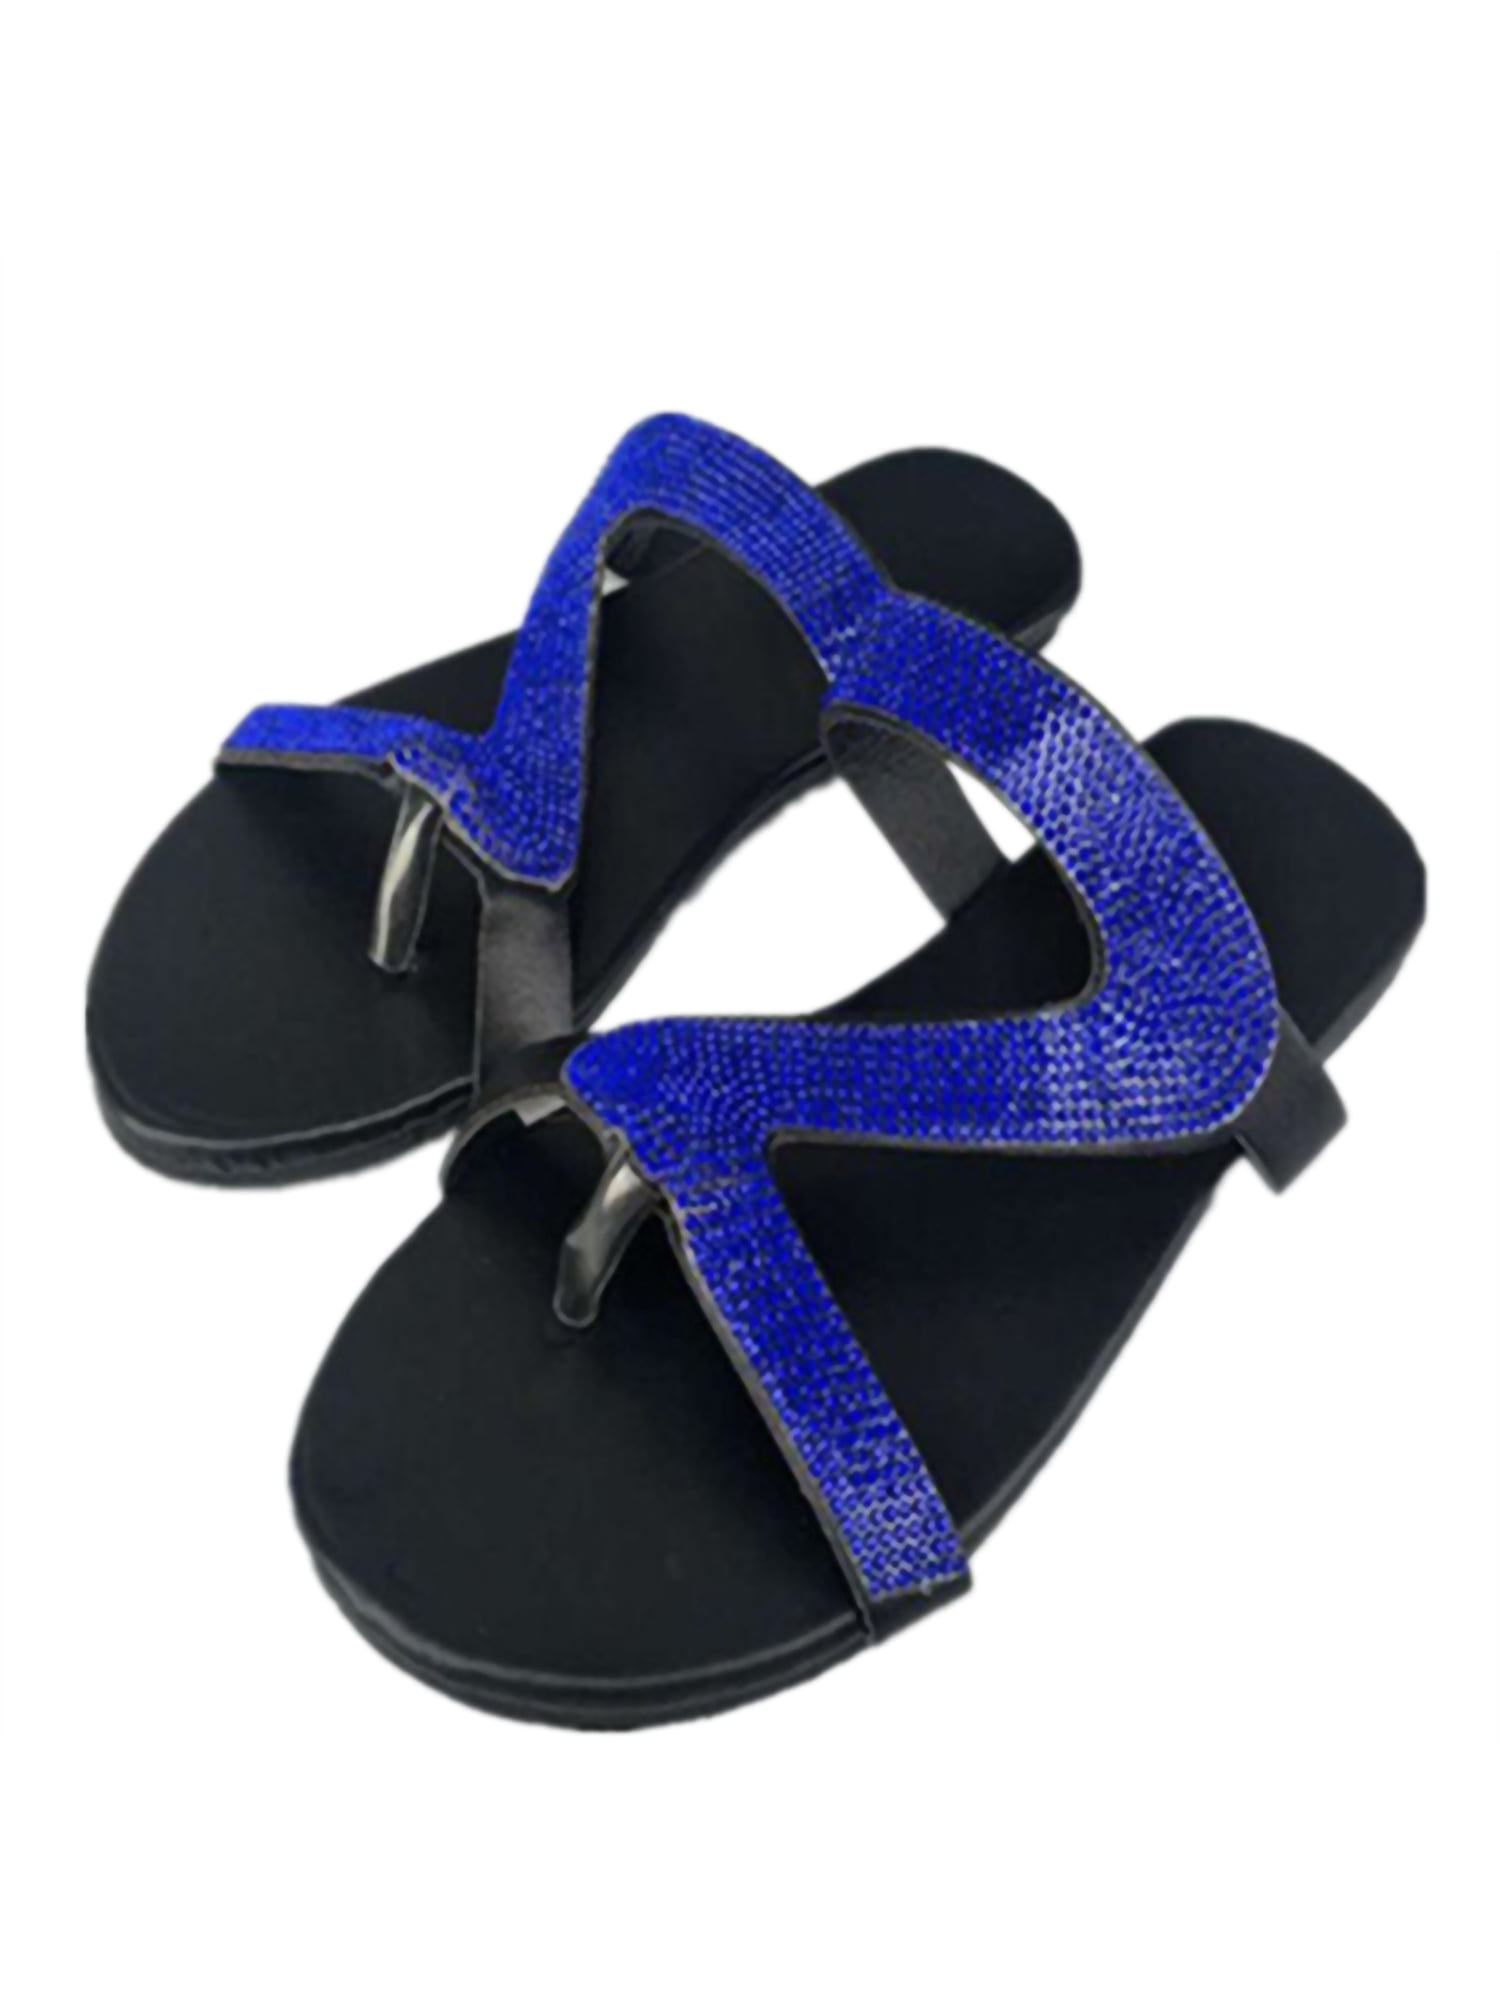 Ladies Toe Post Women Sandals Summer Diamante Flip Flops Sliders Mules Size